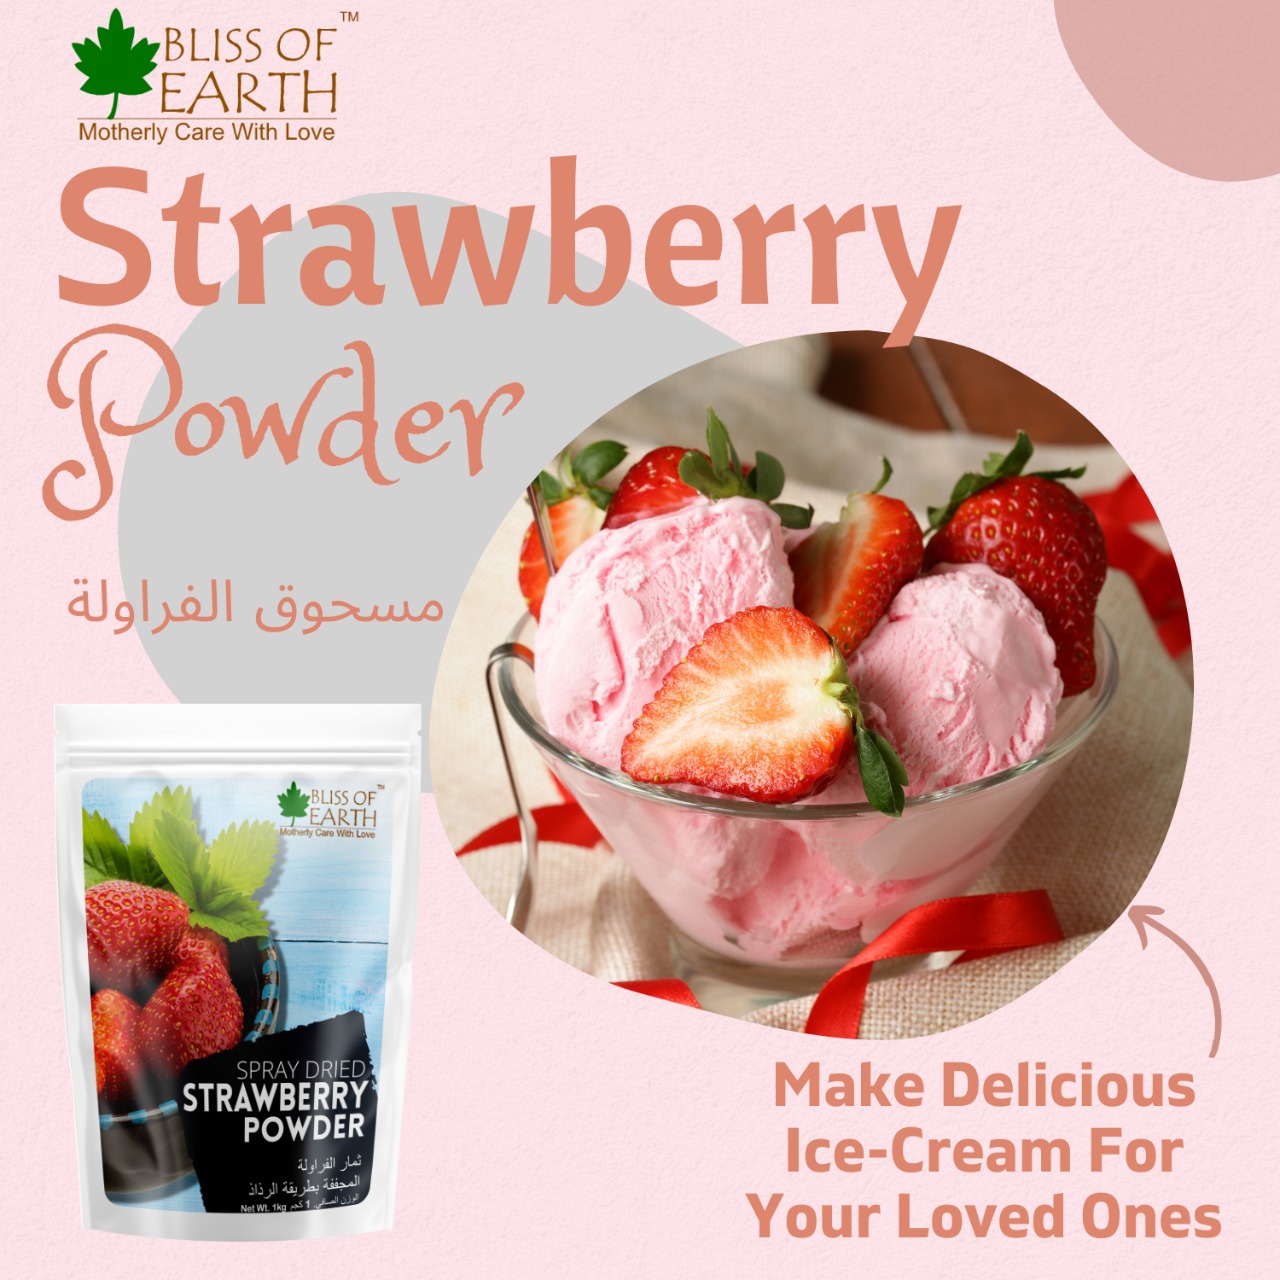 Strawberry Flavored Powder 35.5 oz